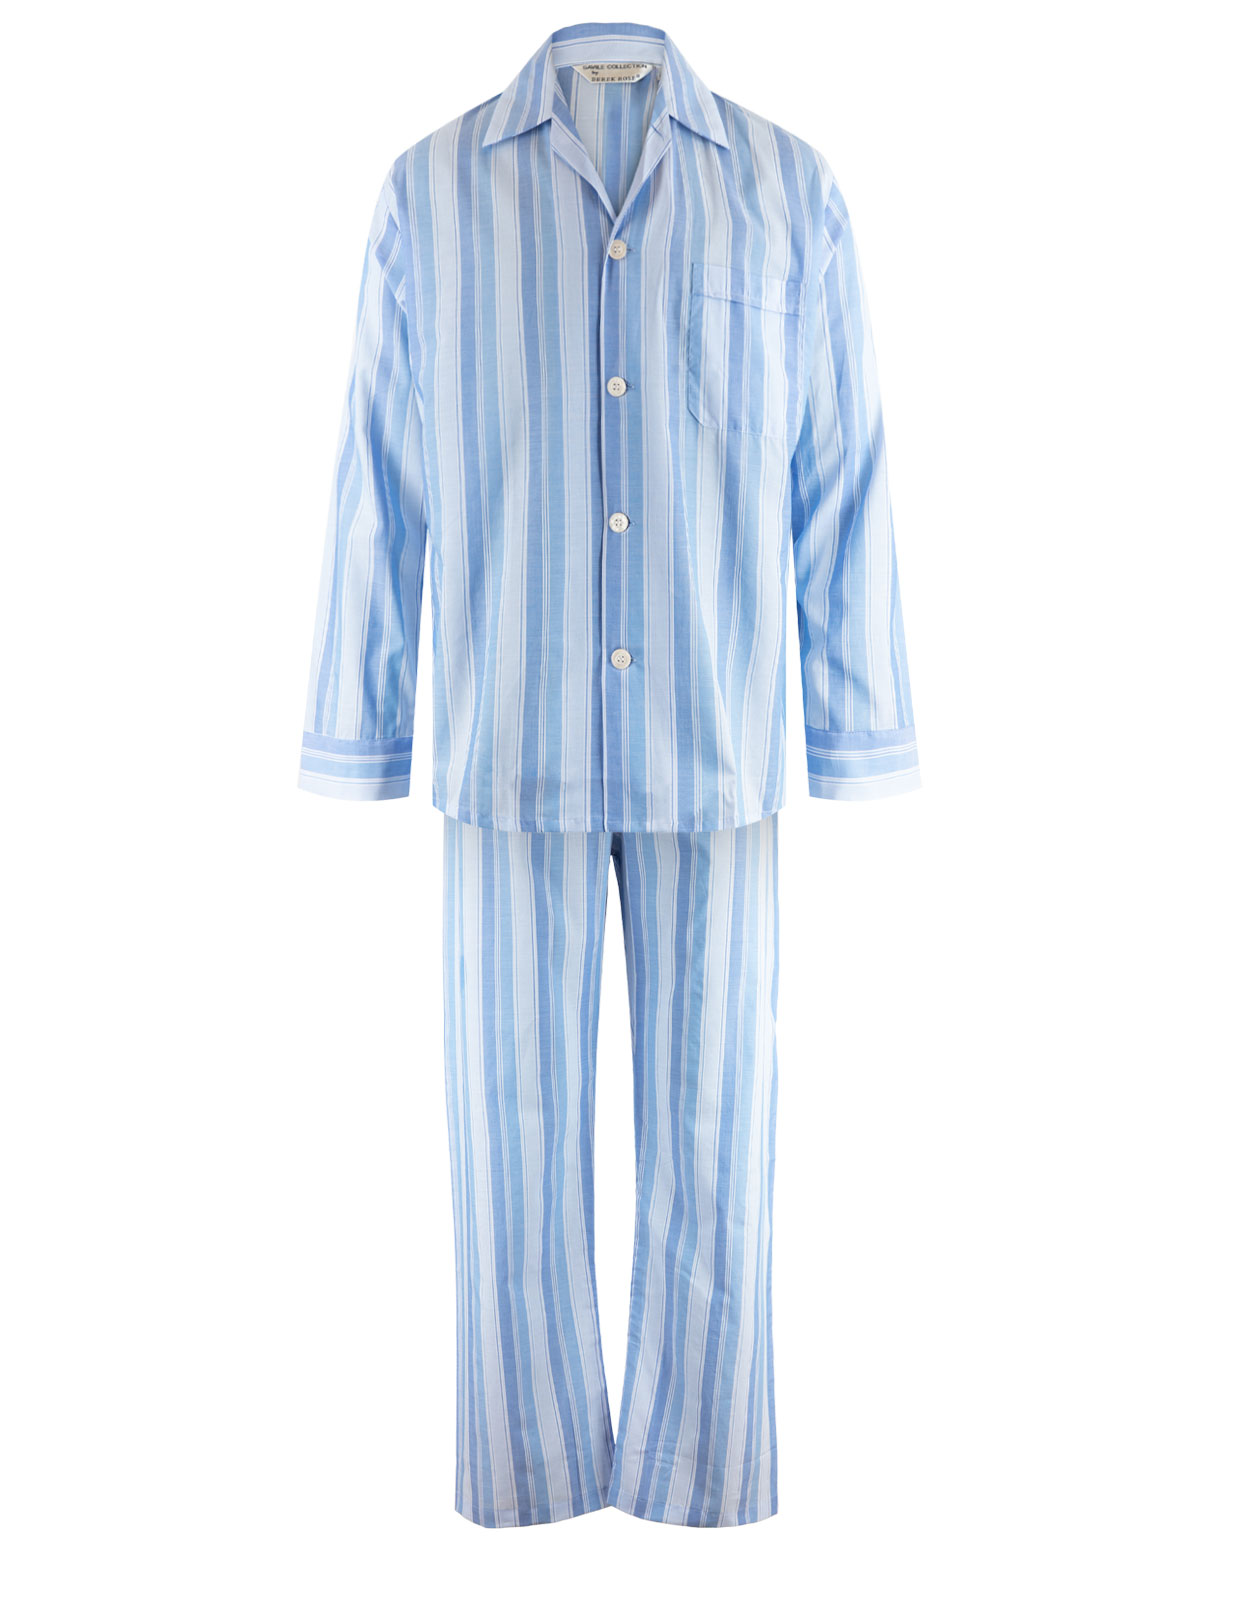 Saville Pyjamas Blå / Vit Stl 50